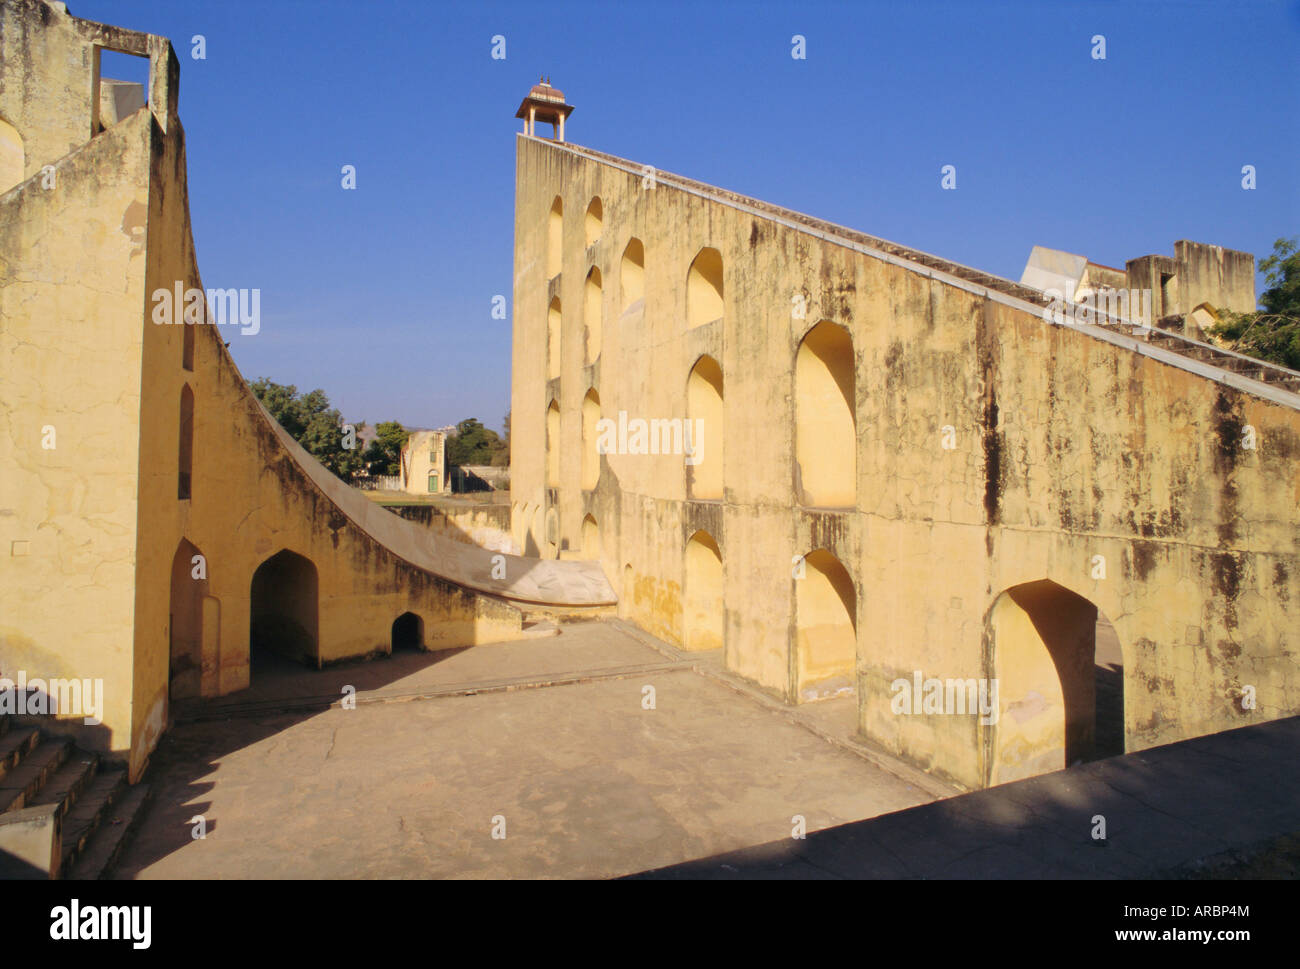 The Jantar Mantar built in 1728-34 by Jai Singh II as an observatory, Jaipur, Rajasthan, India Stock Photo